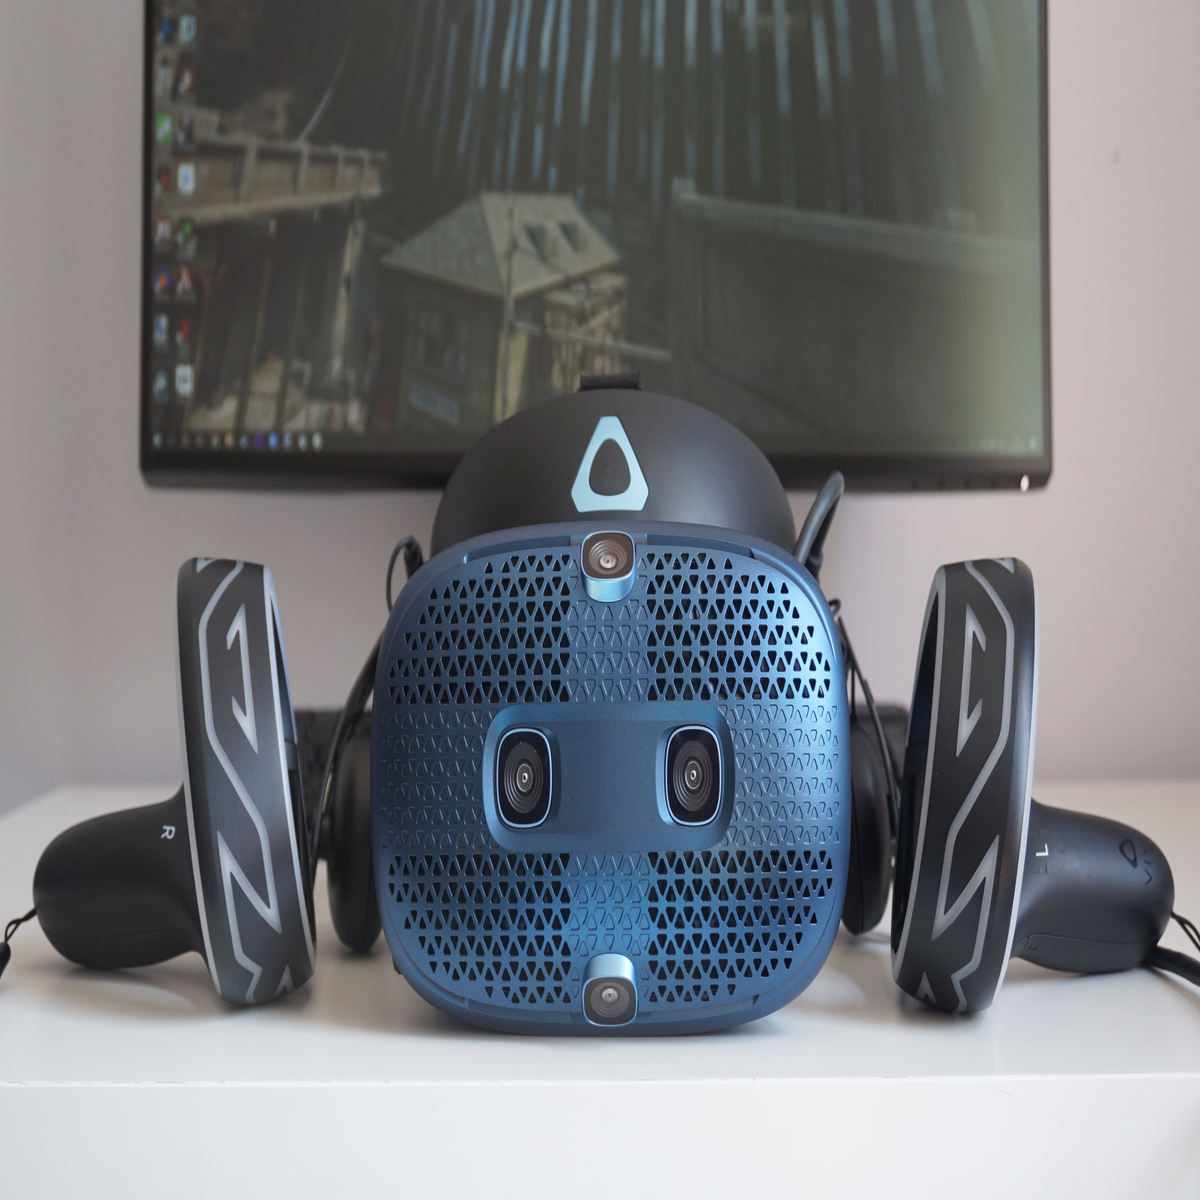 HTC Vive Cosmos Elite VR Headset With Hi-Res 3D spatial audio - TAB Retail